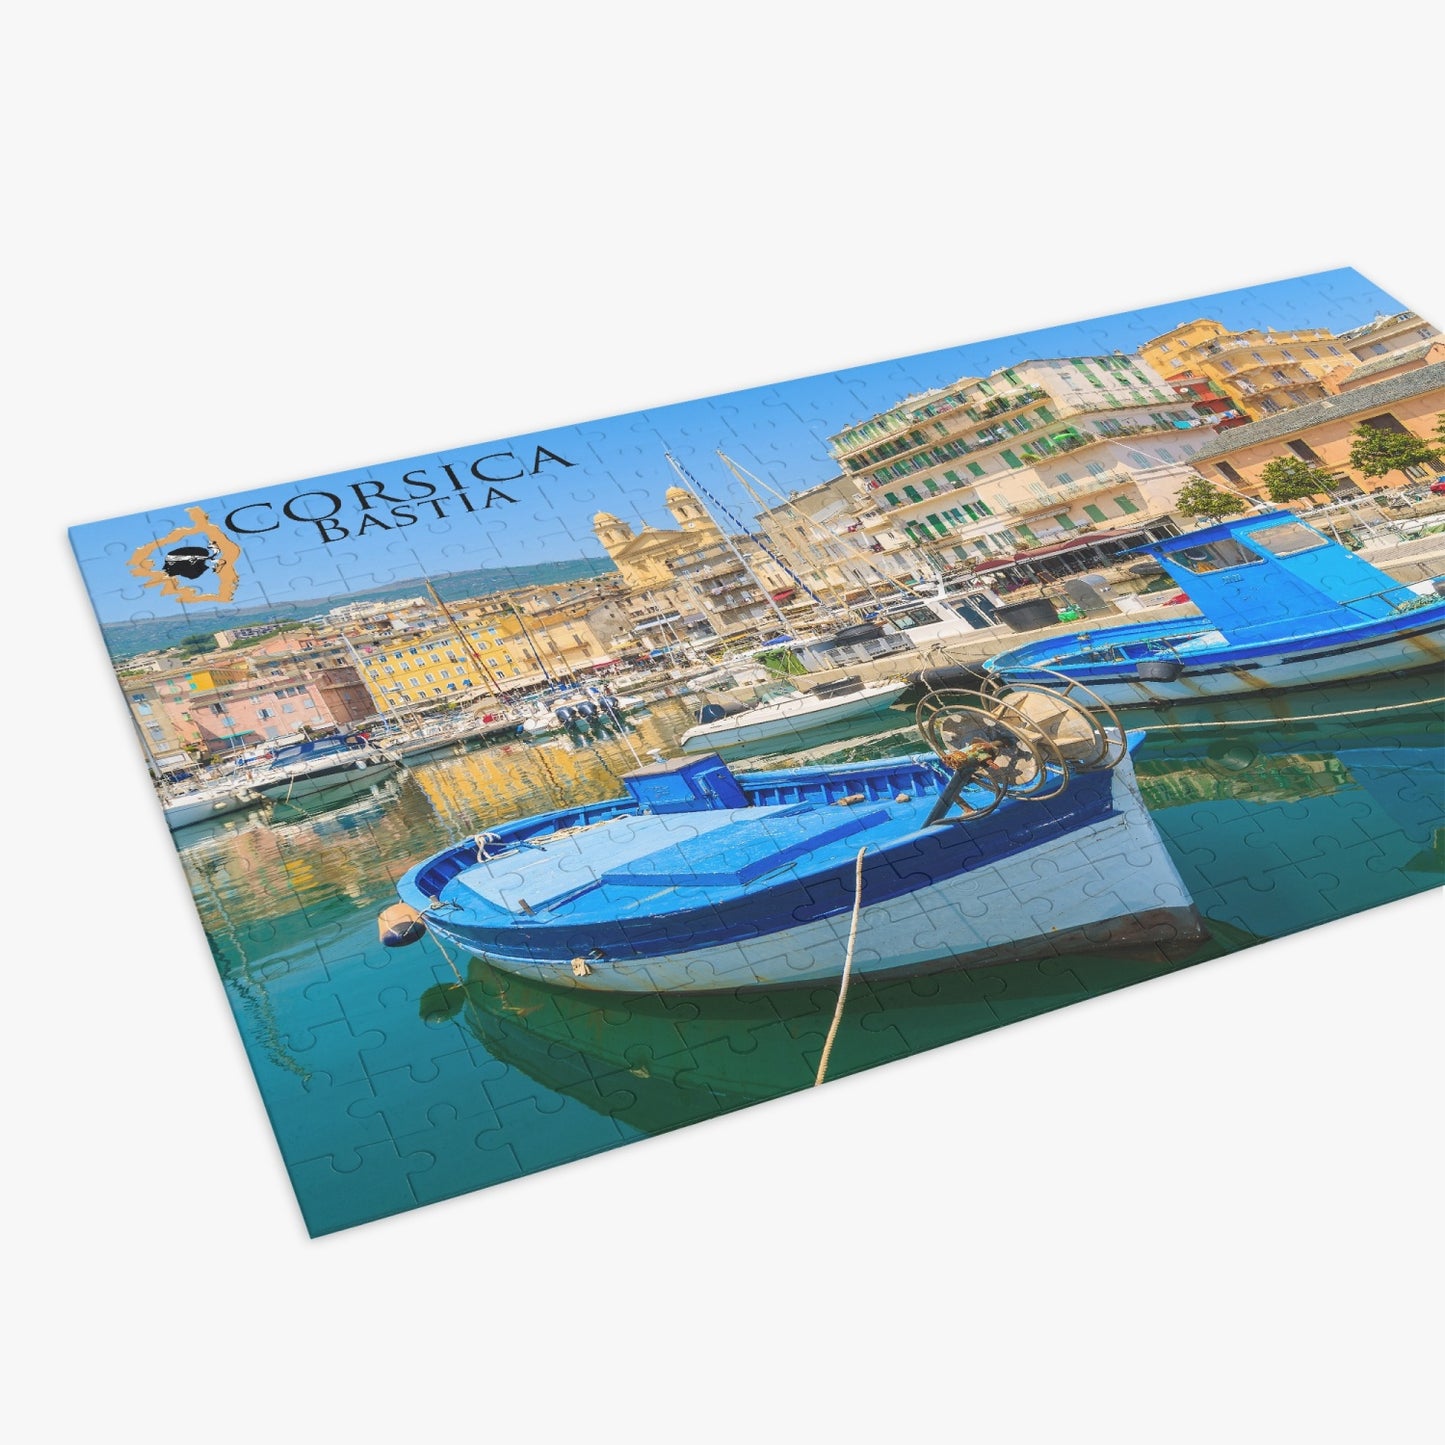 Puzzle (500 pièces) Bastia Corsica